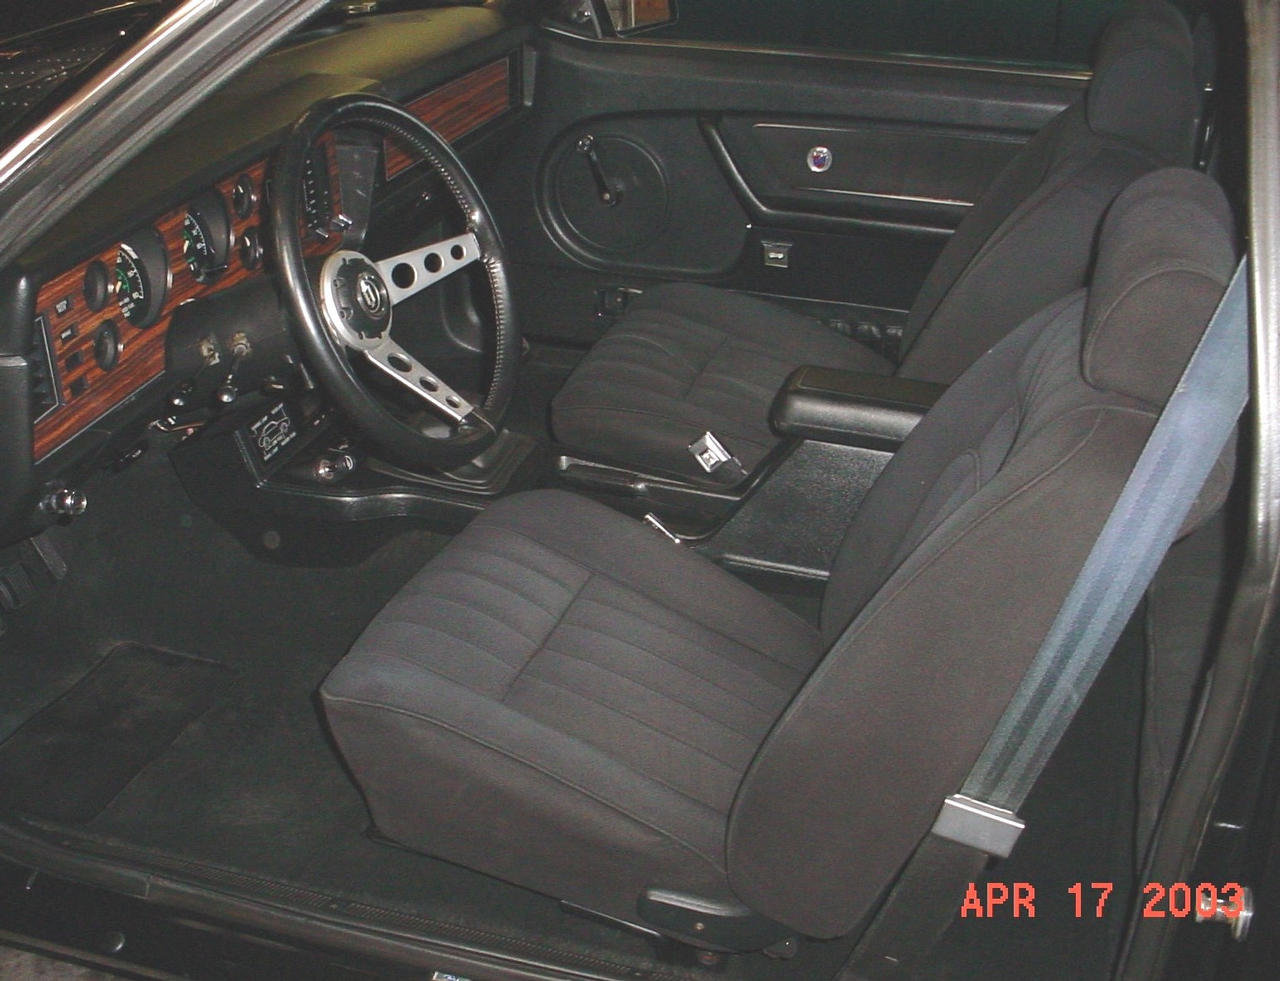 1979 Mustang interior